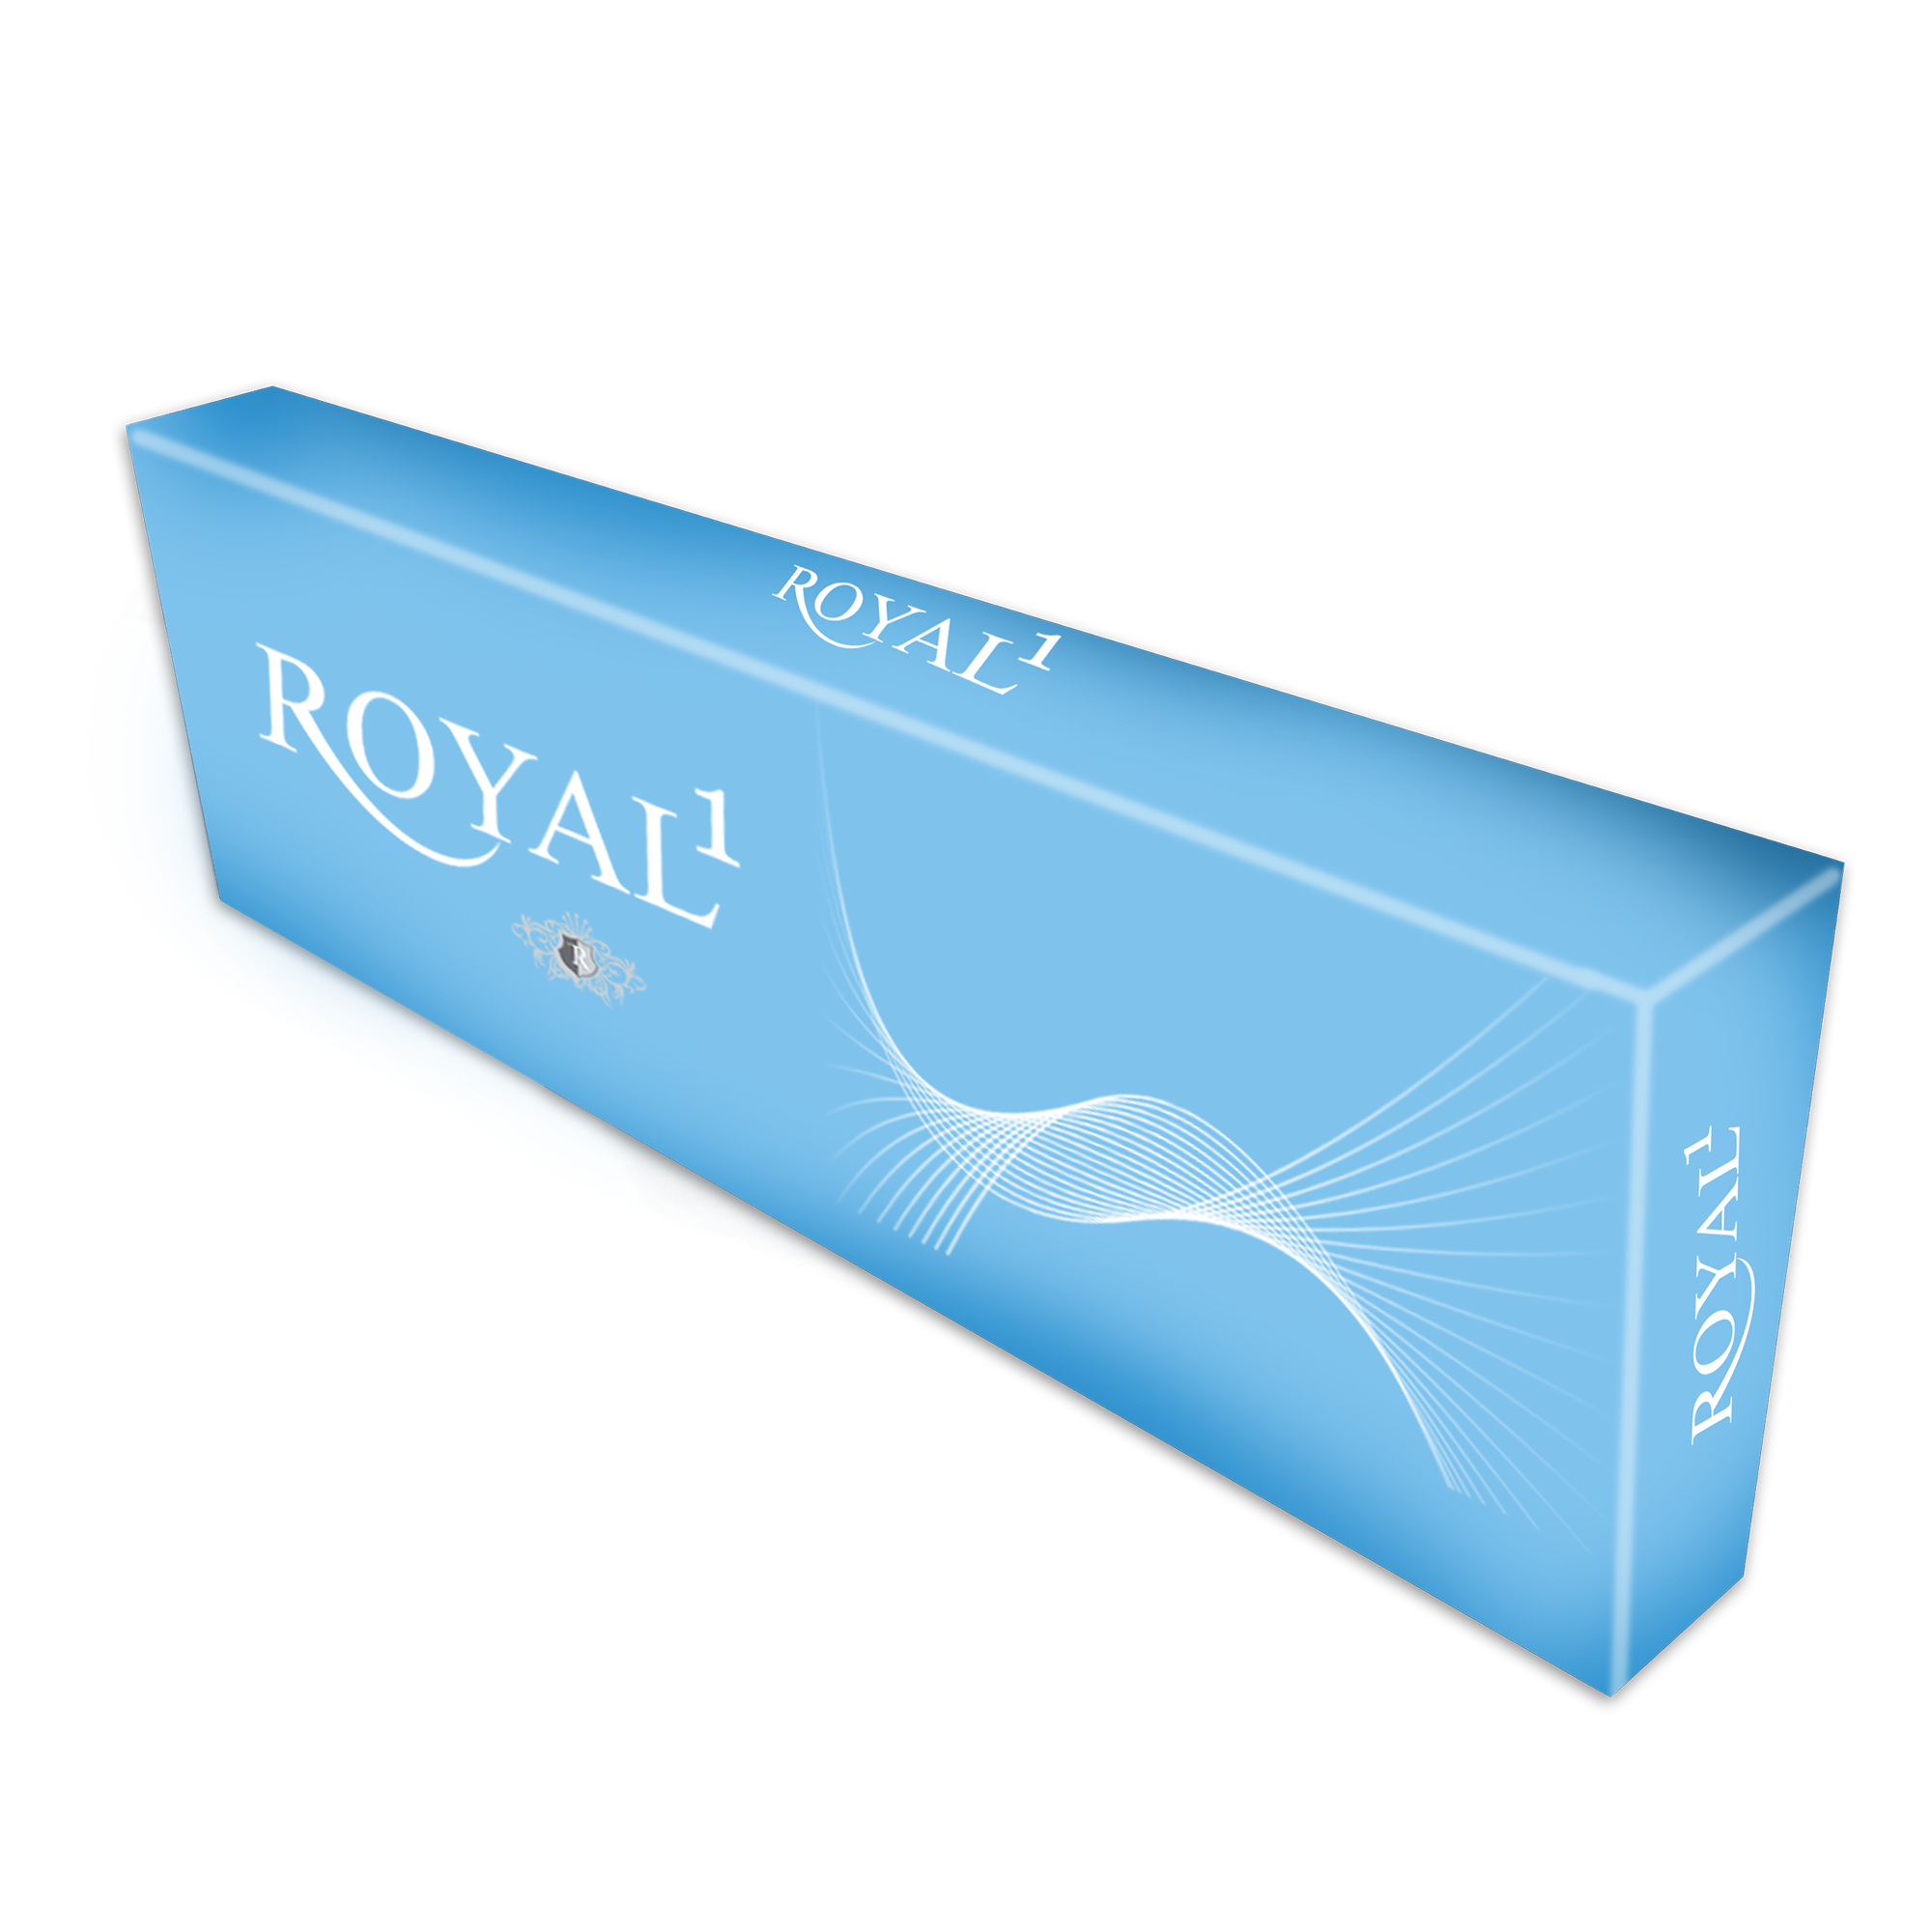  Royal1 Blue box 